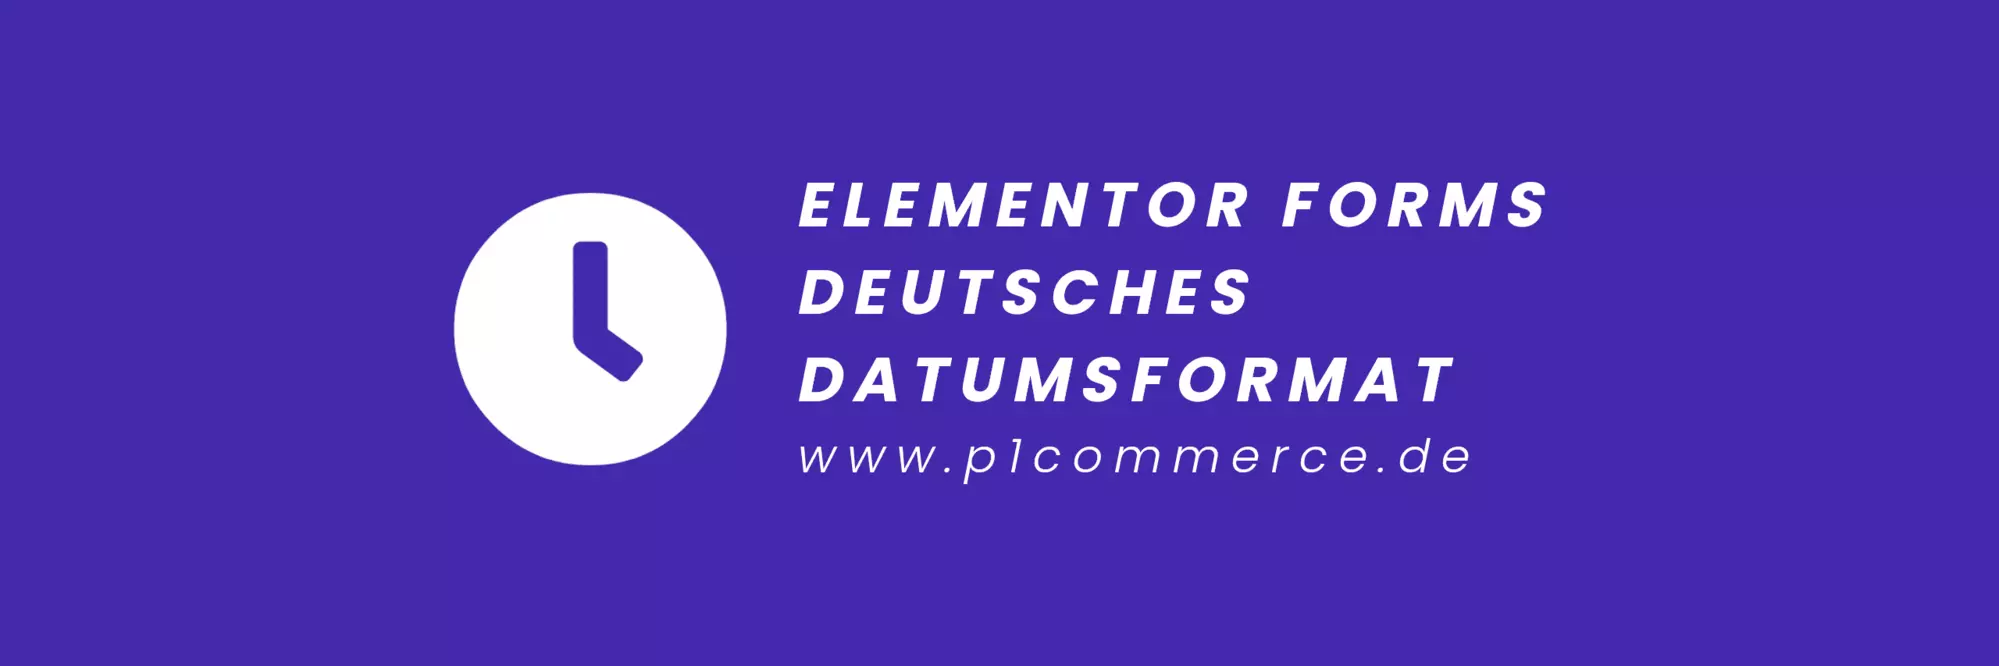 elementor forms deutsches datumsformat p1 commerce